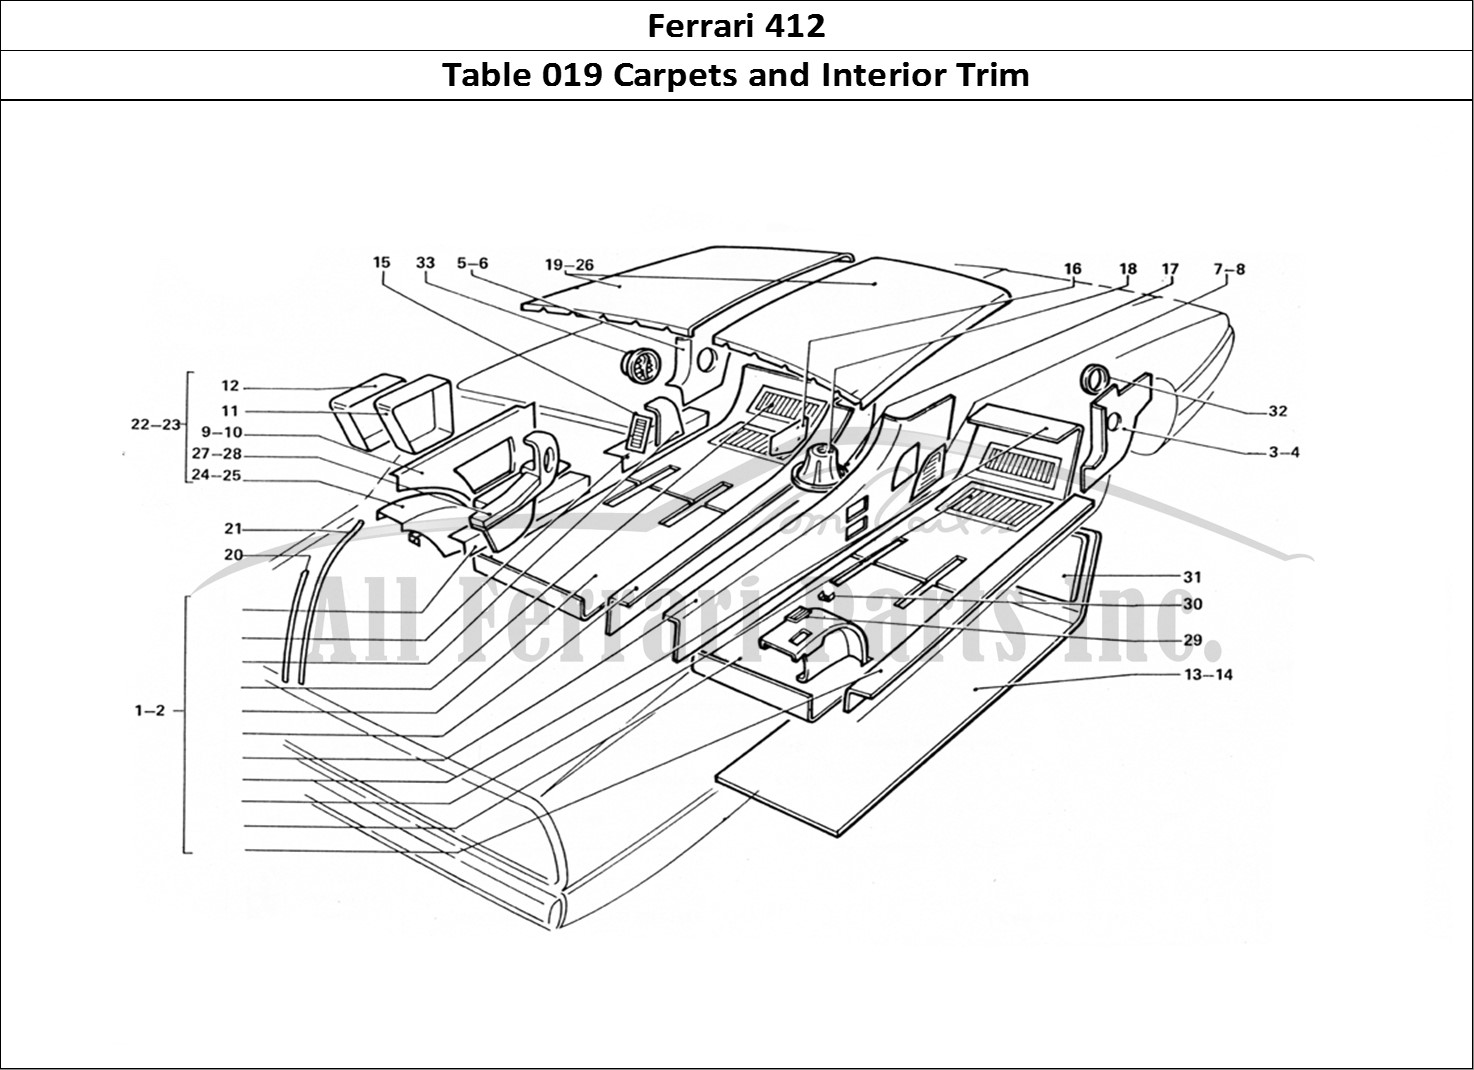 Ferrari Parts Ferrari 412 (Coachwork) Page 019 Carpets & Inner Trims